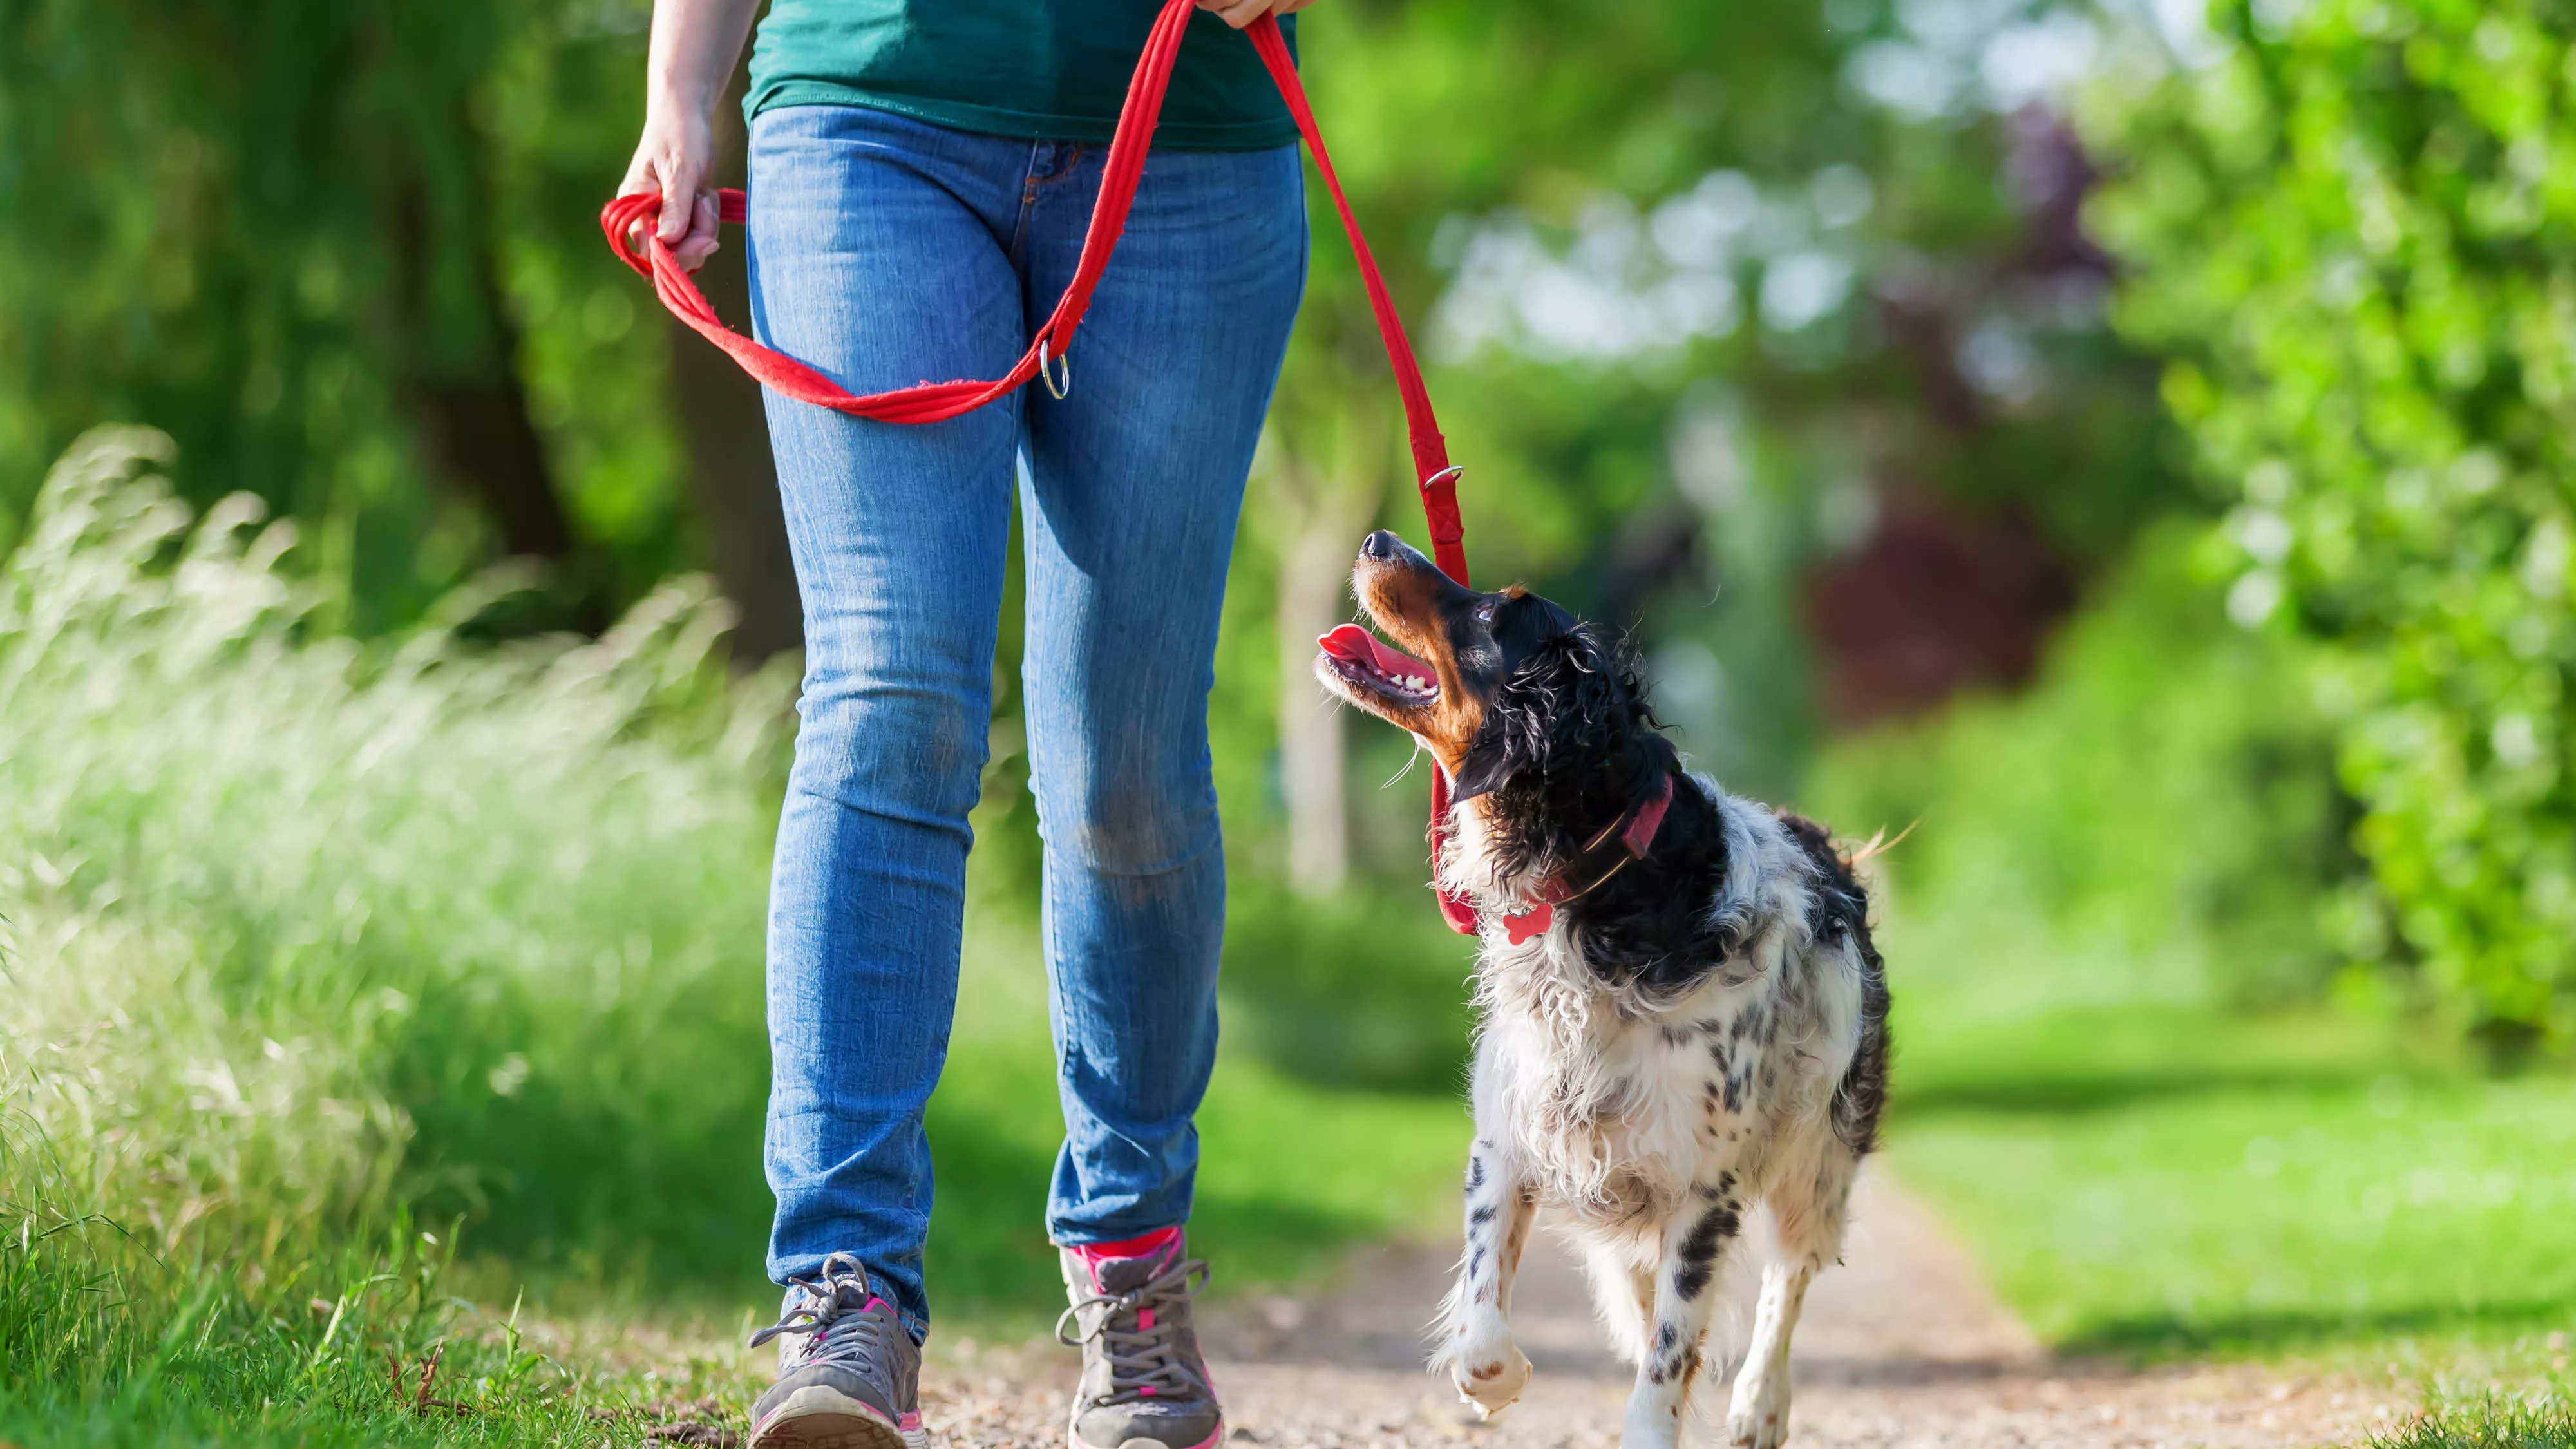 Someone walking their dog on a leash on a trail